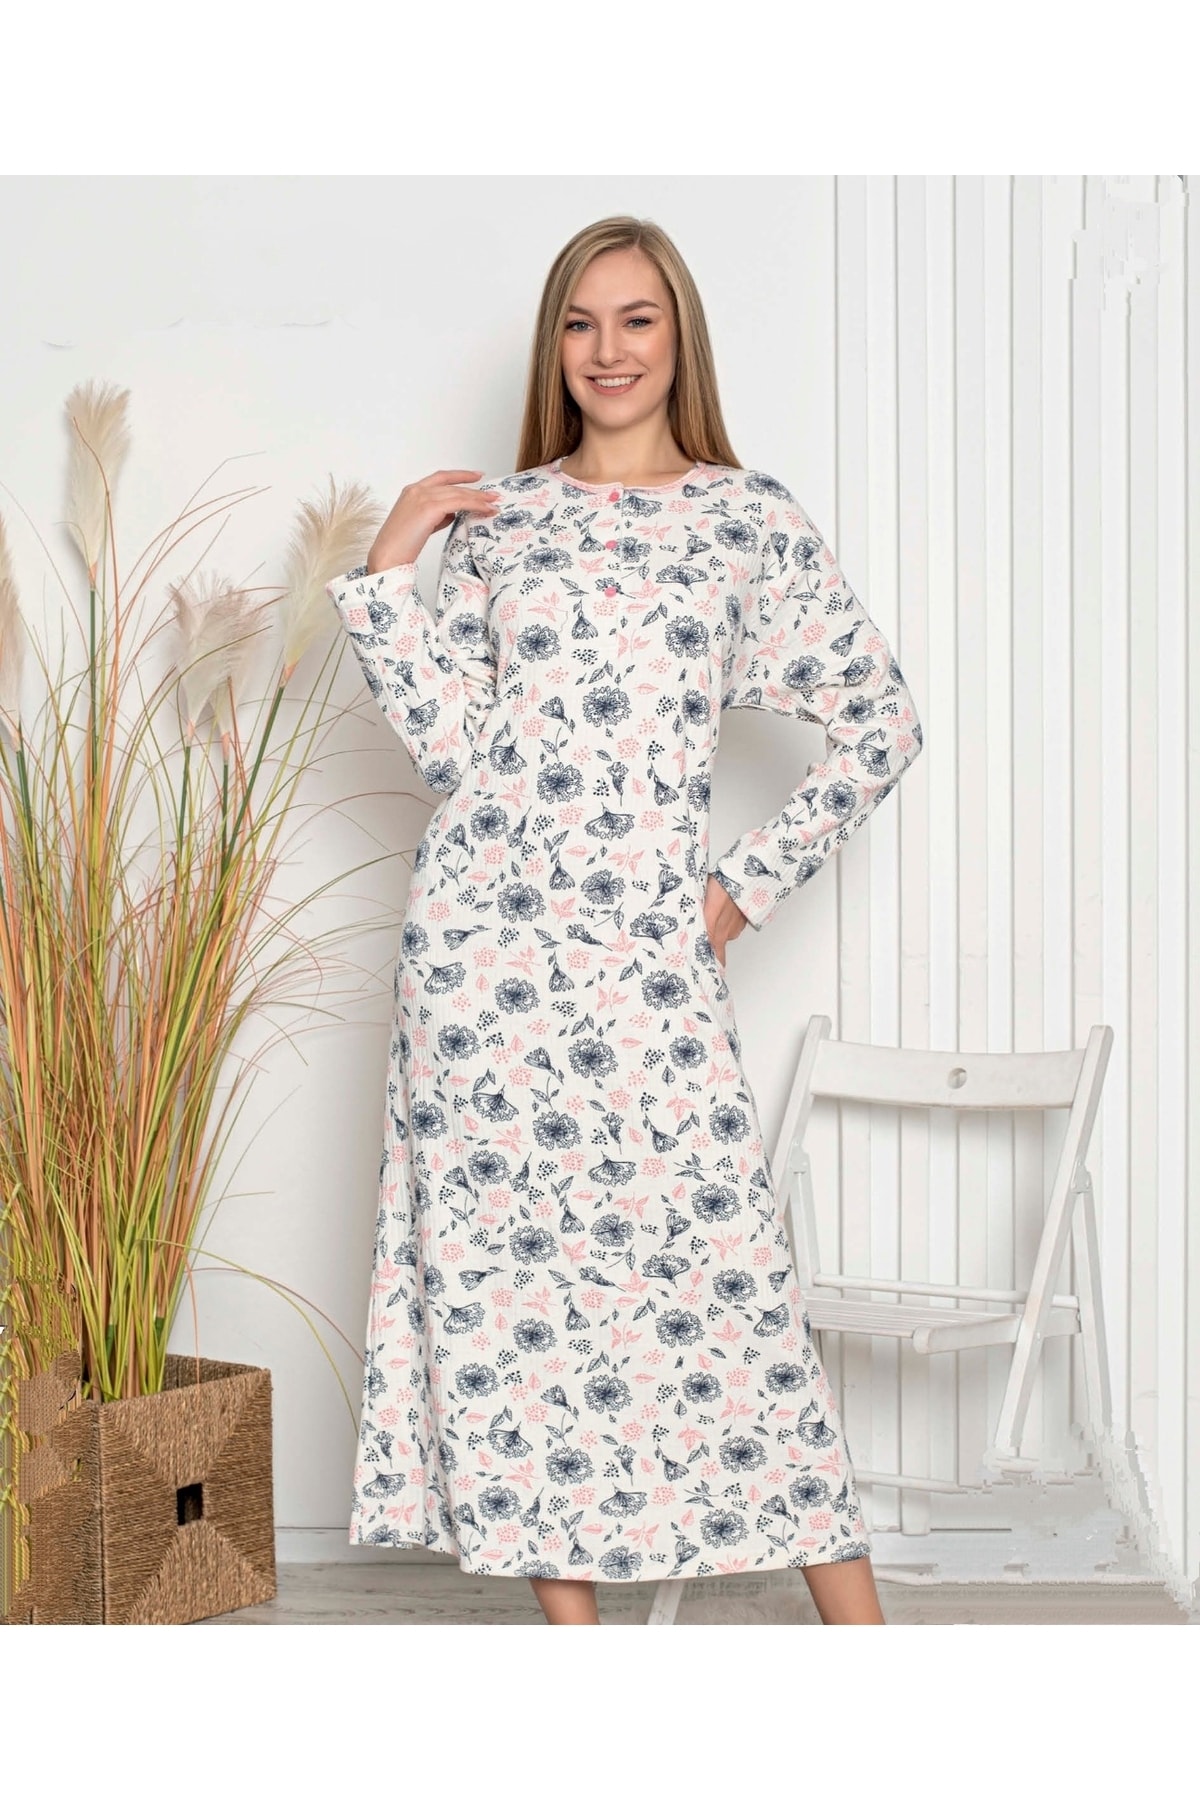 Flamingo Shop Gecelik Pijama Ev Home Elbise Kıyafet Rahat ZO8422